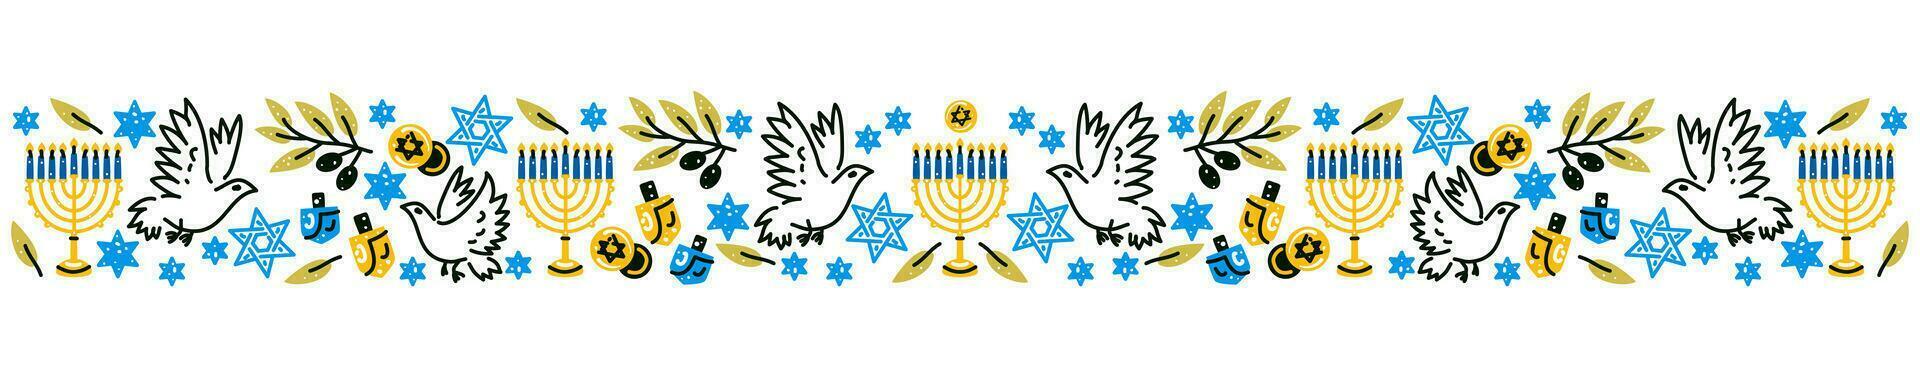 Happy Hanukkah banner. Flat vector illustration with holiday symbols